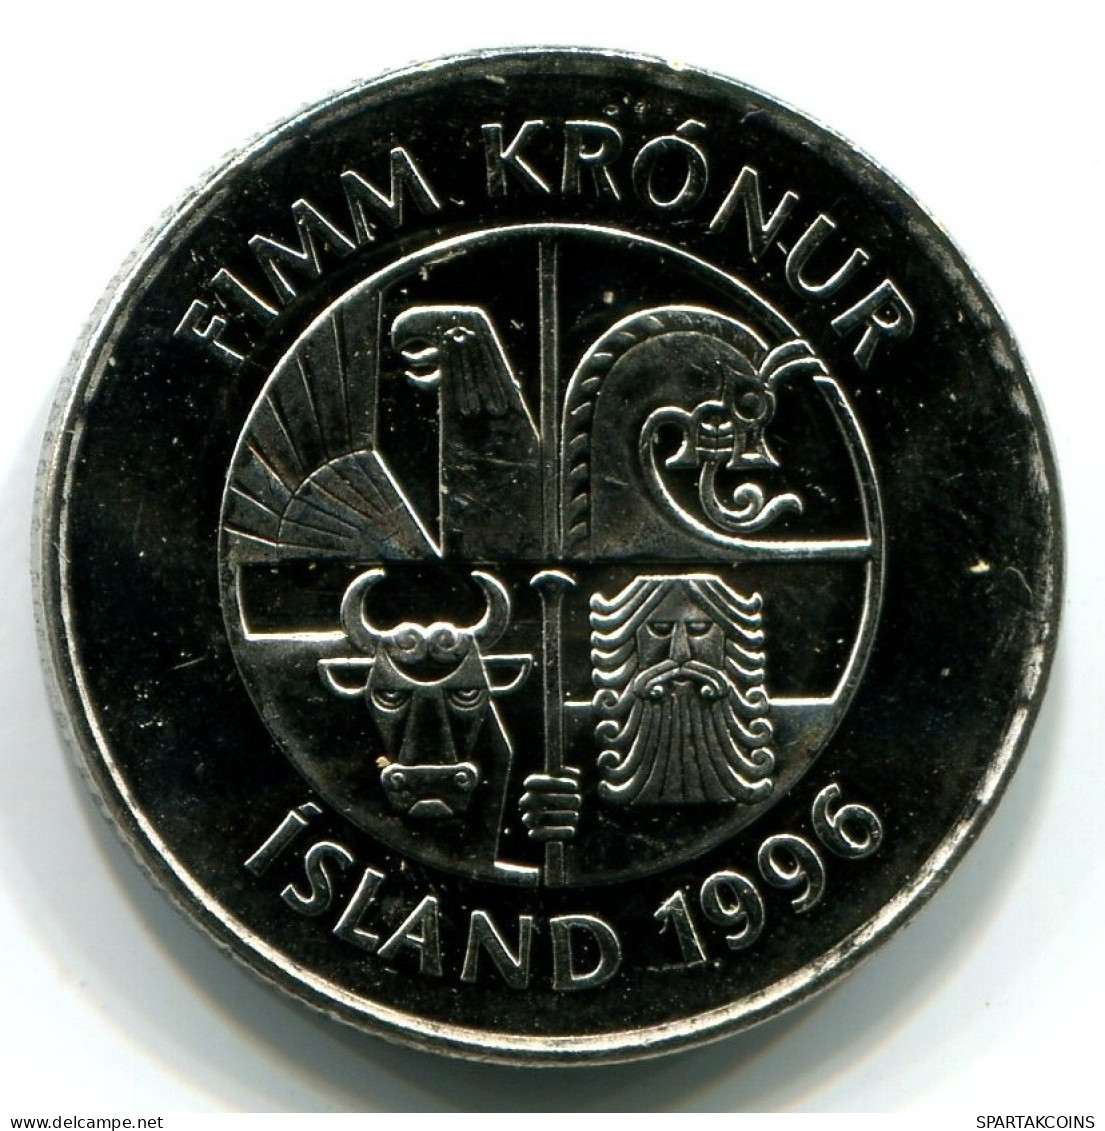 5 KRONA 1996 ICELAND UNC Dolphins Coin #W10998.U.A - IJsland